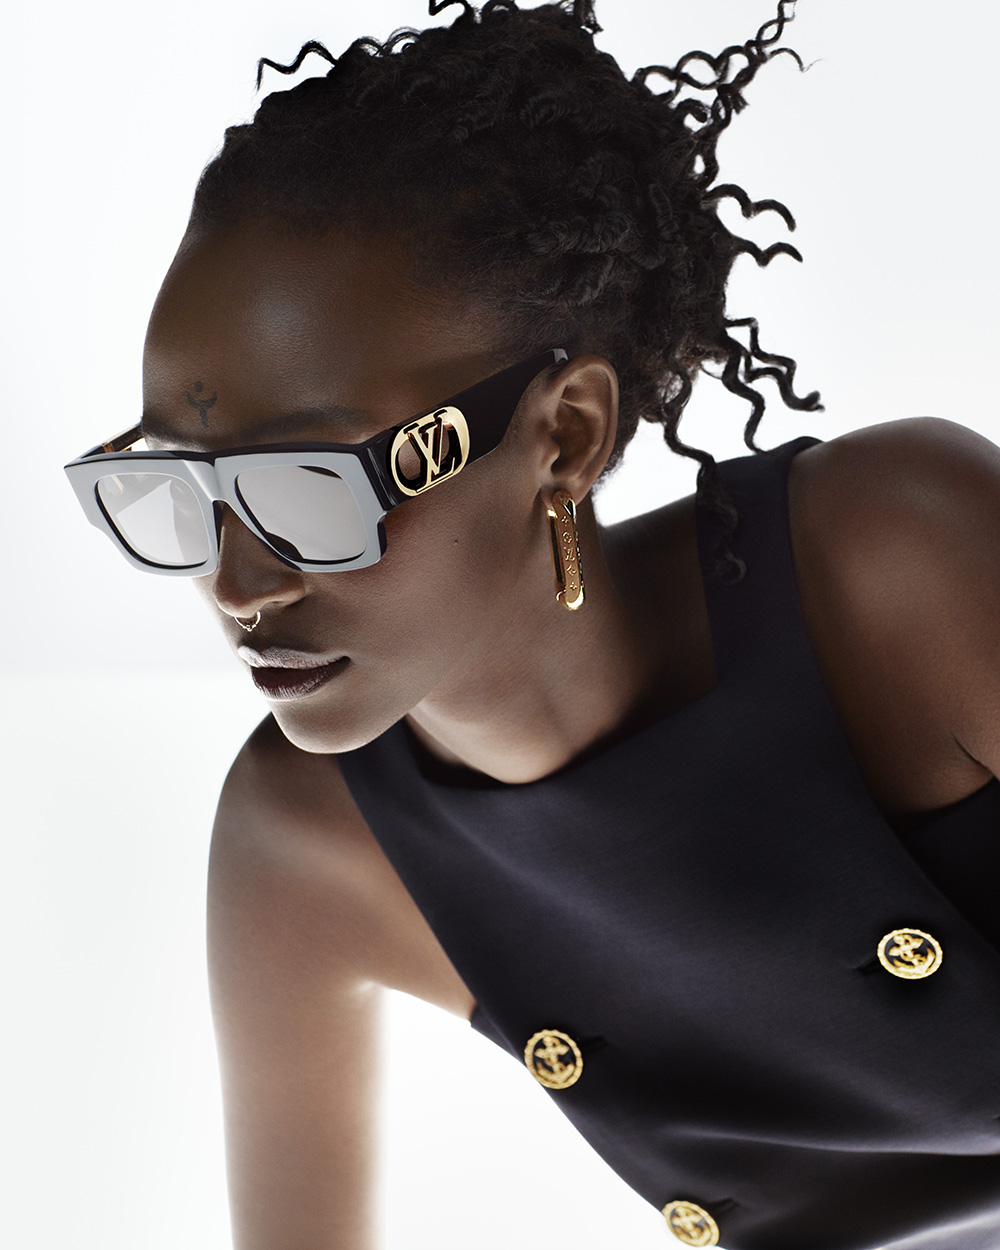 Louis Vuitton LV Jewel Cat Eye Sunglasses Gradient Blue Metal. Size U